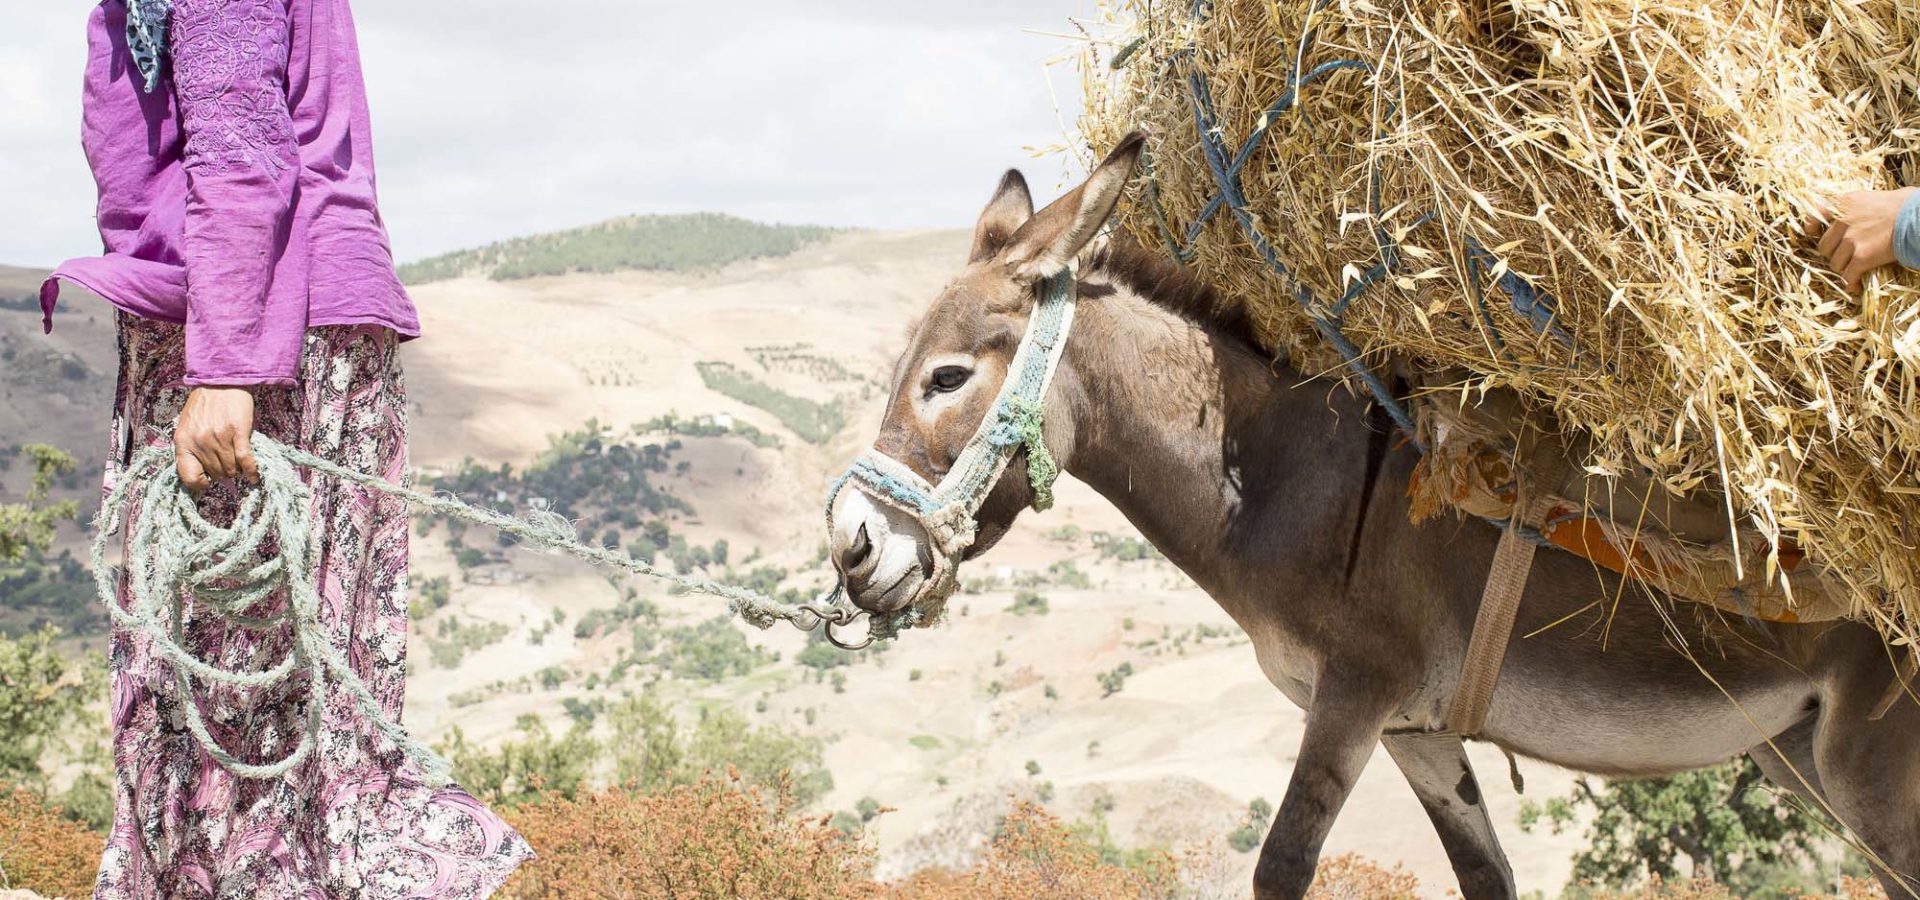 Donkey carrying hay